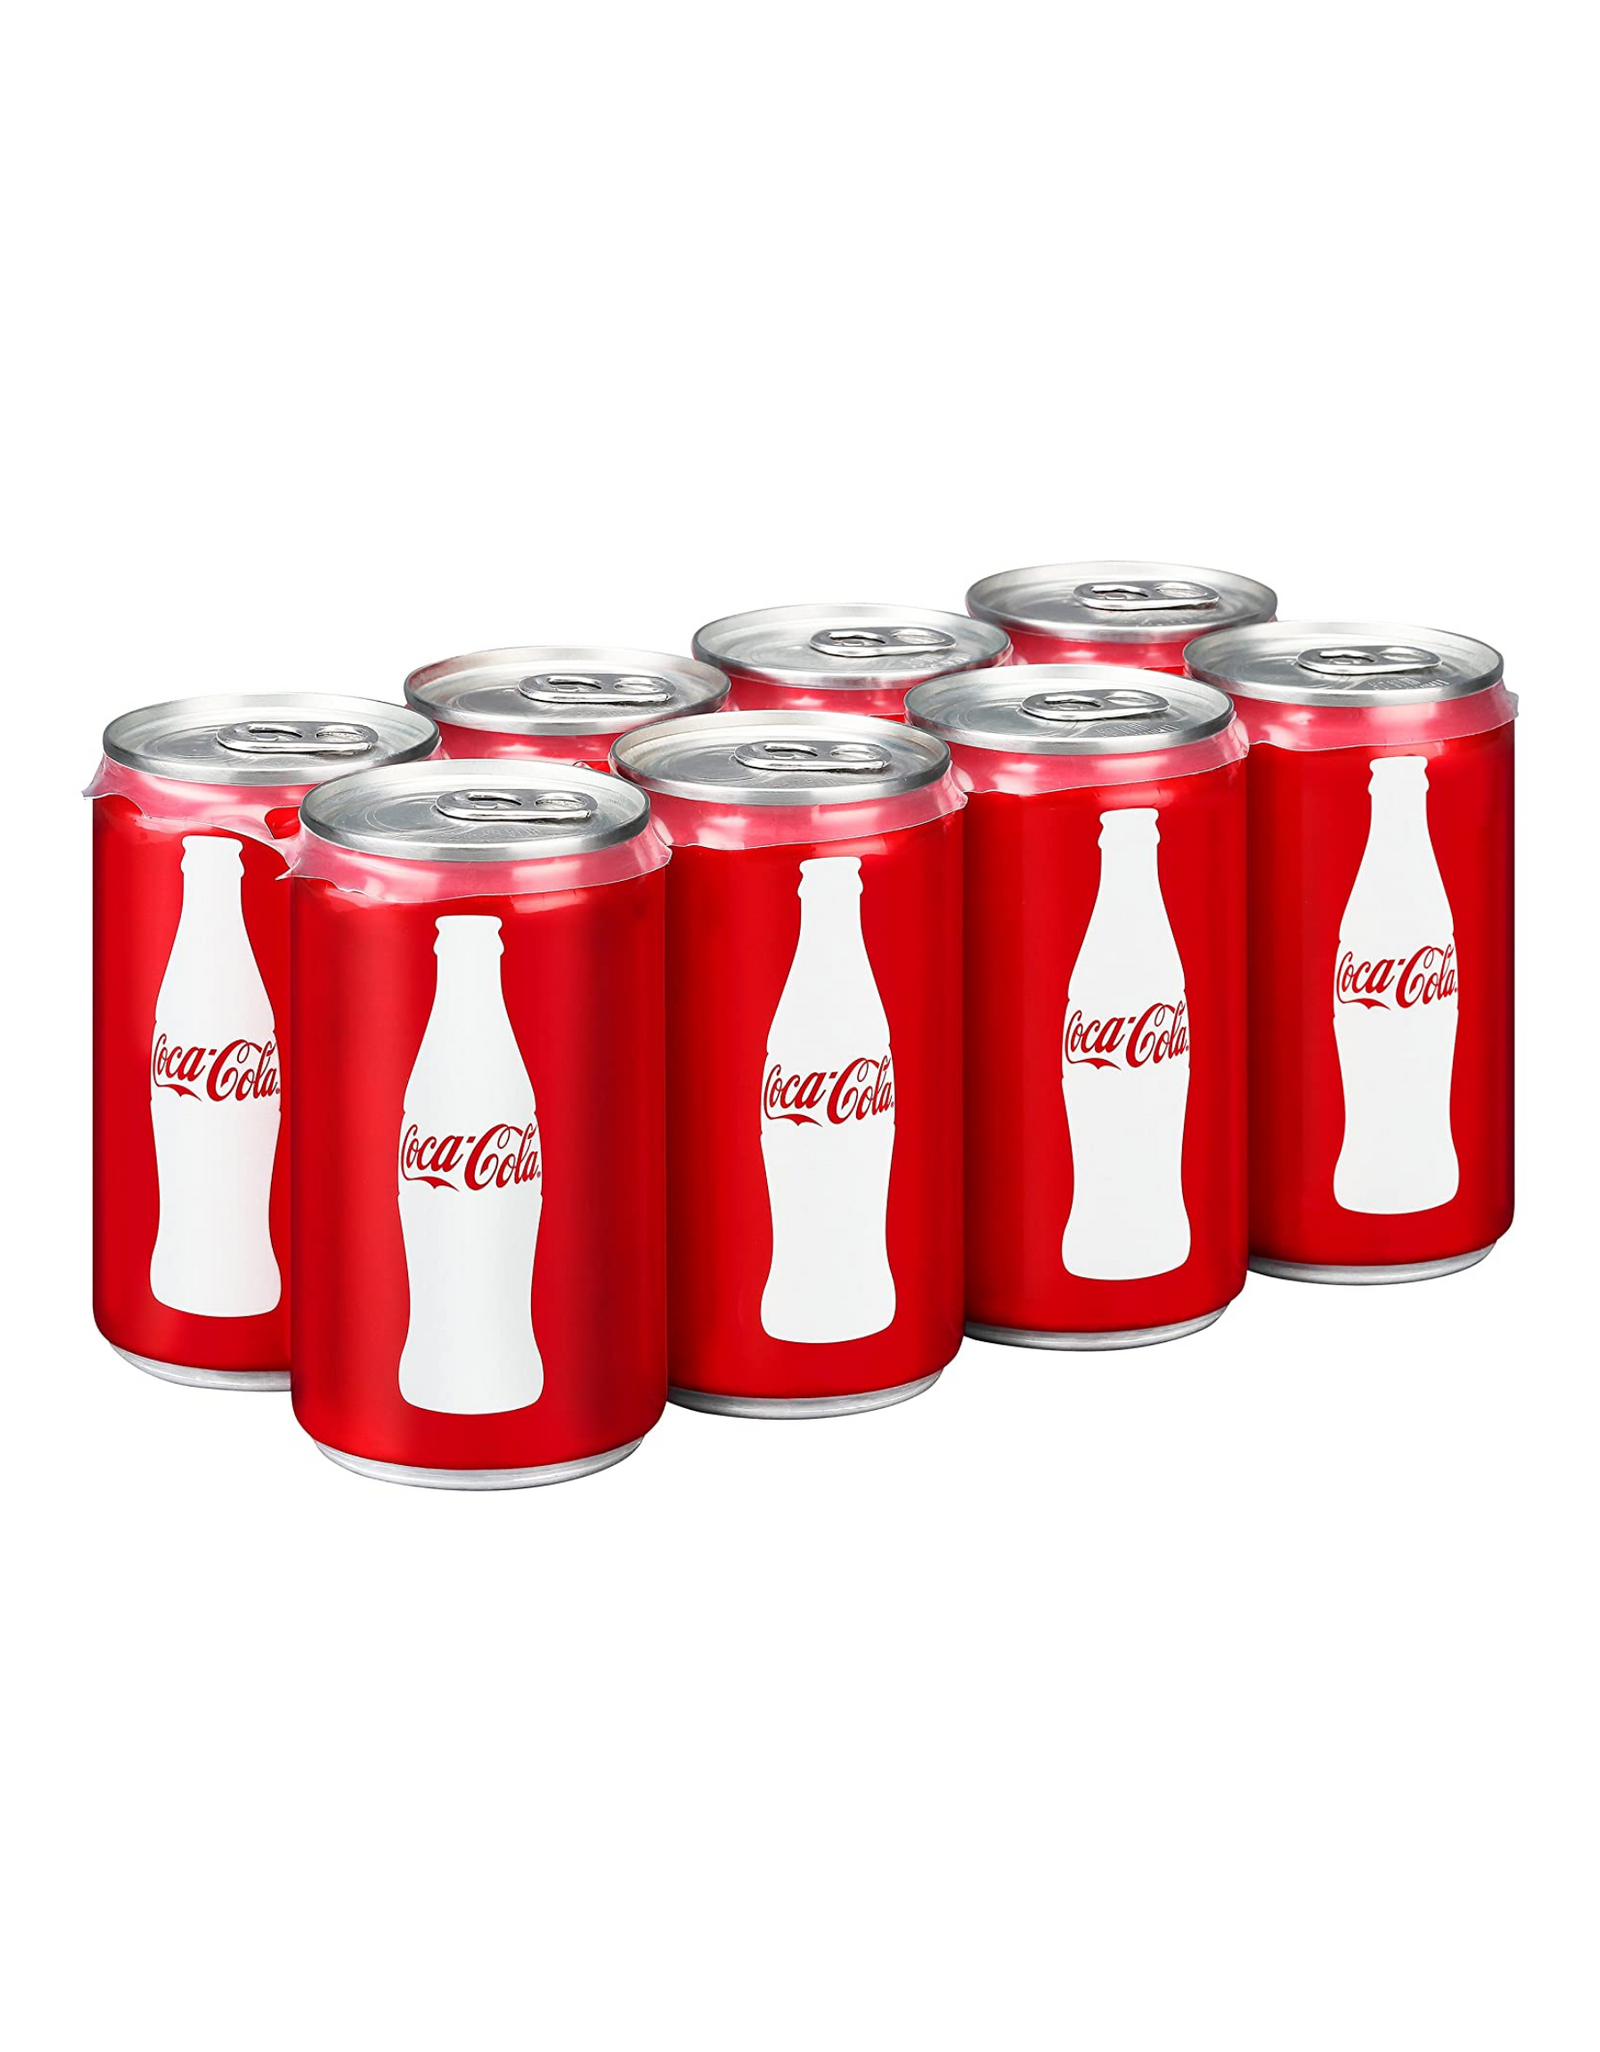 Coca-Cola mini can, 7.5 fl oz (Pack of 8)